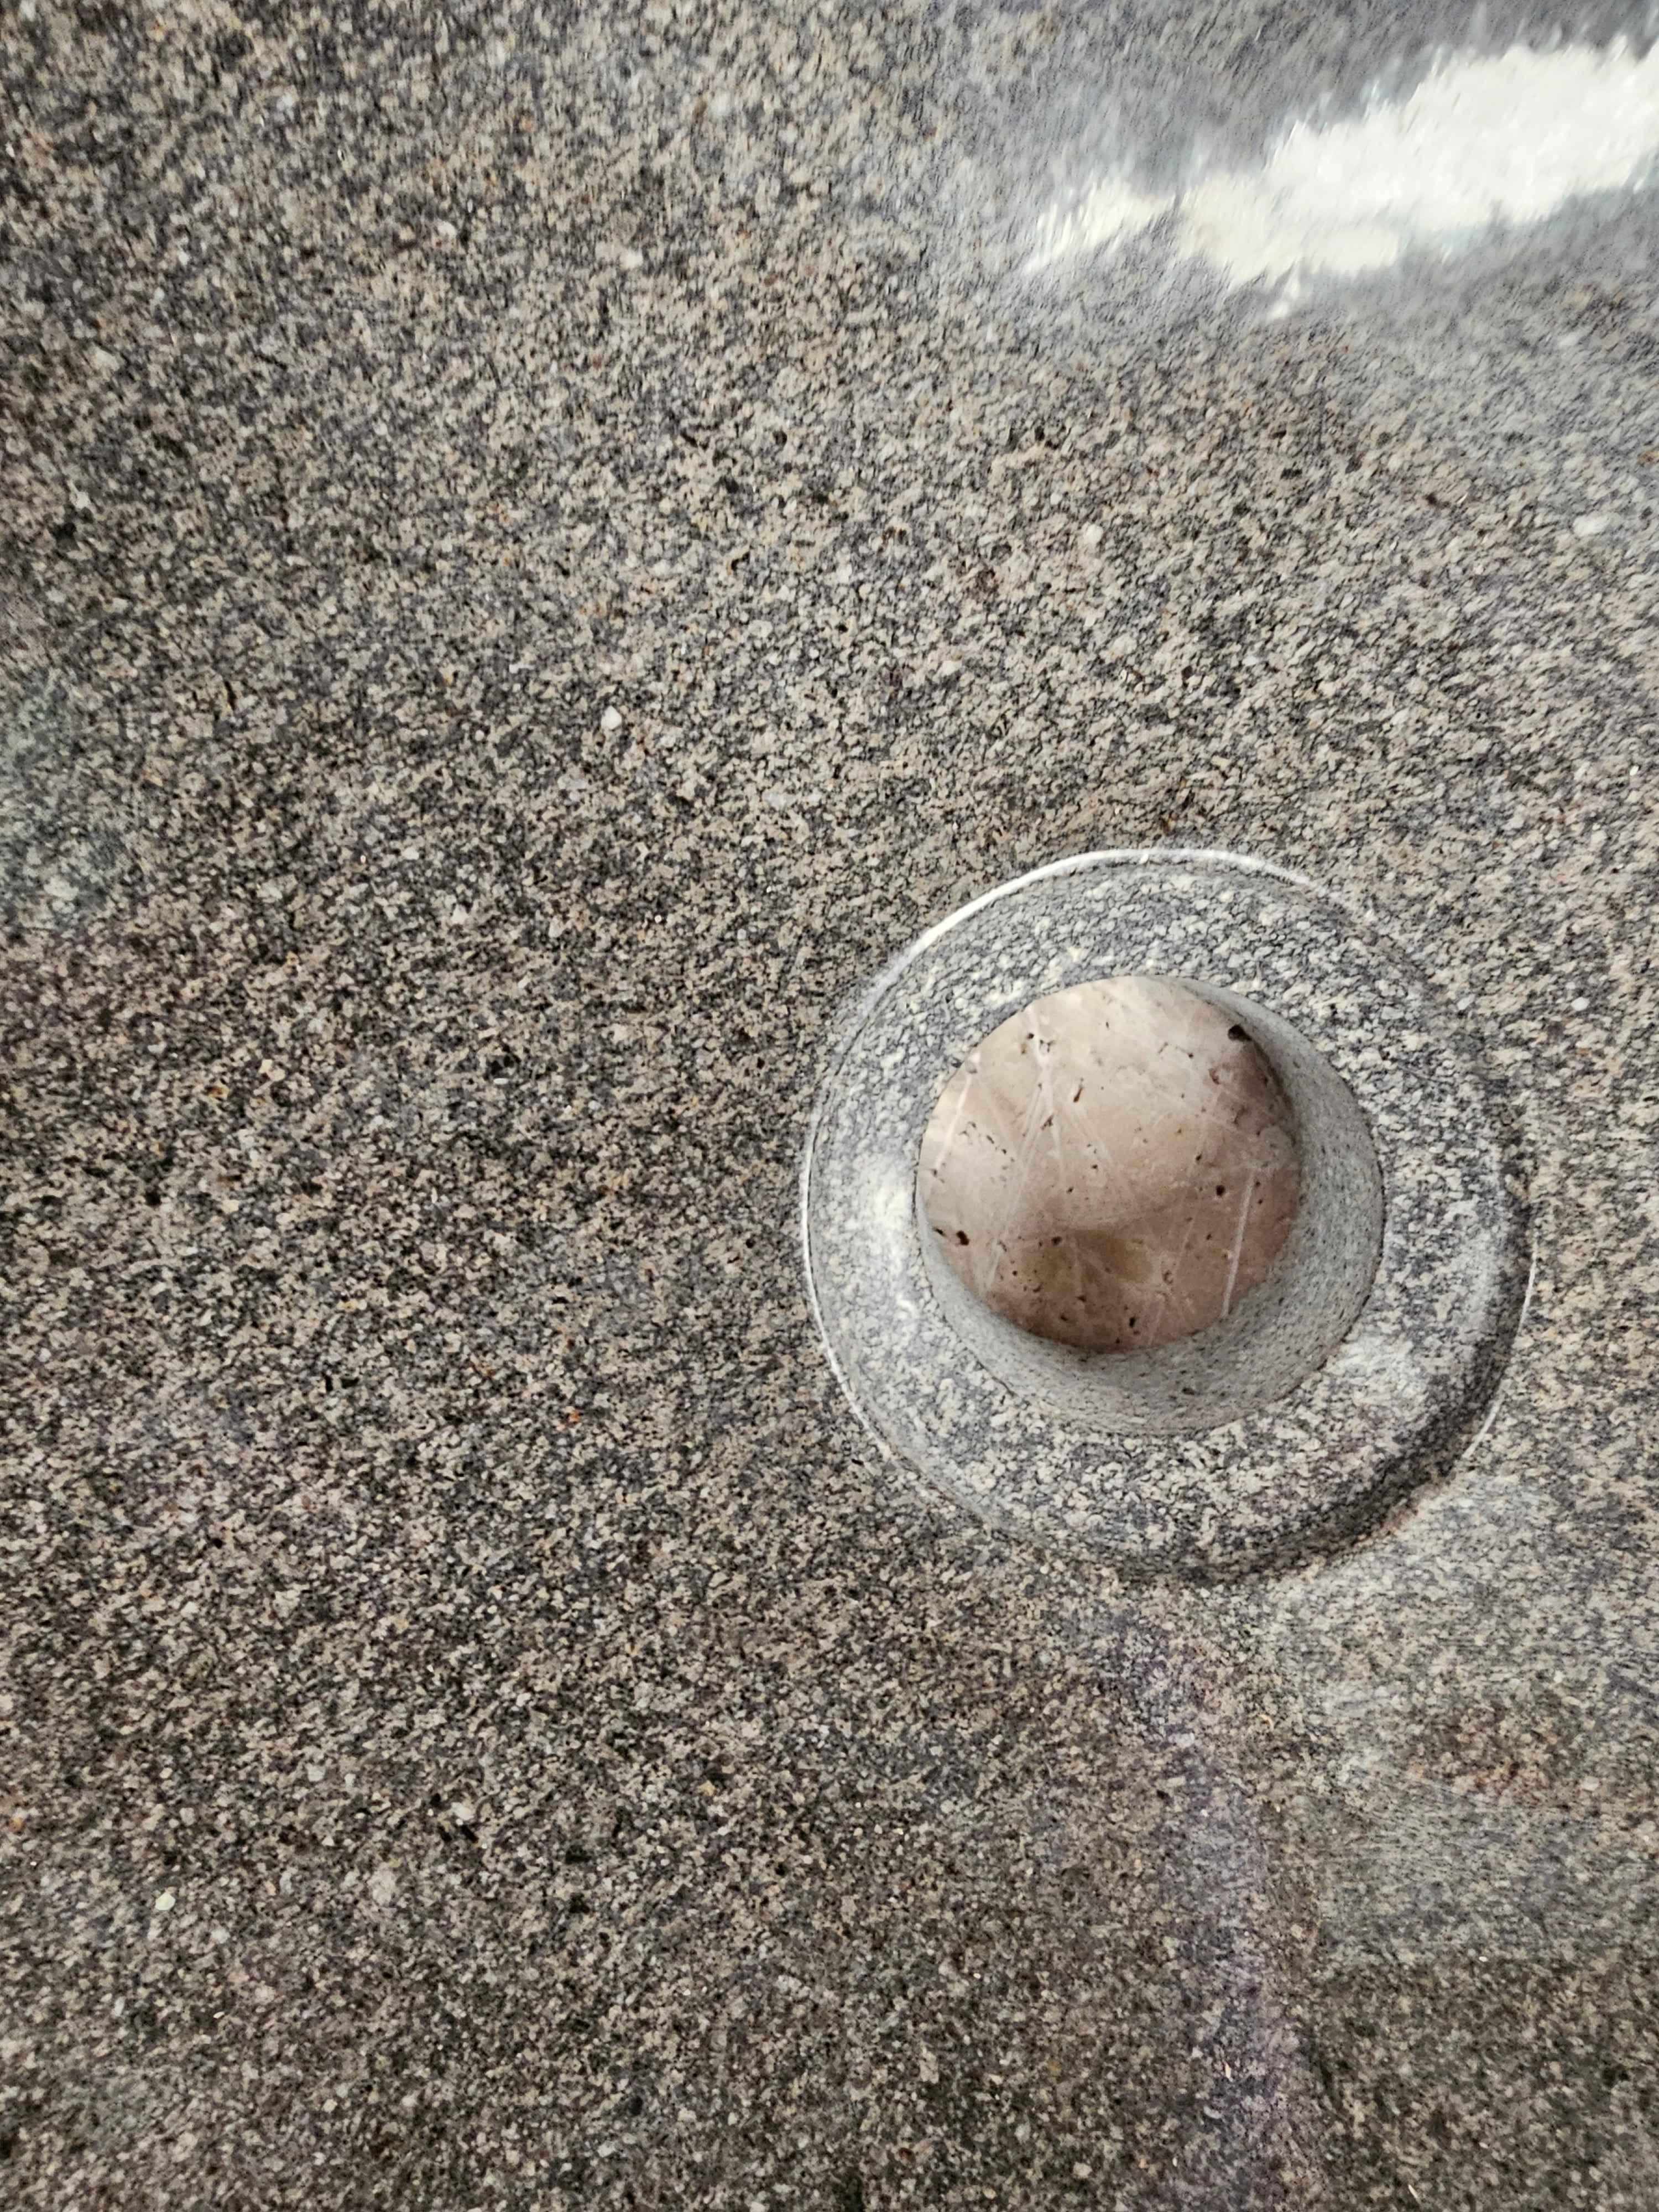 Handmade Natural Oval River Stone Bathroom Basin - RVL 221220